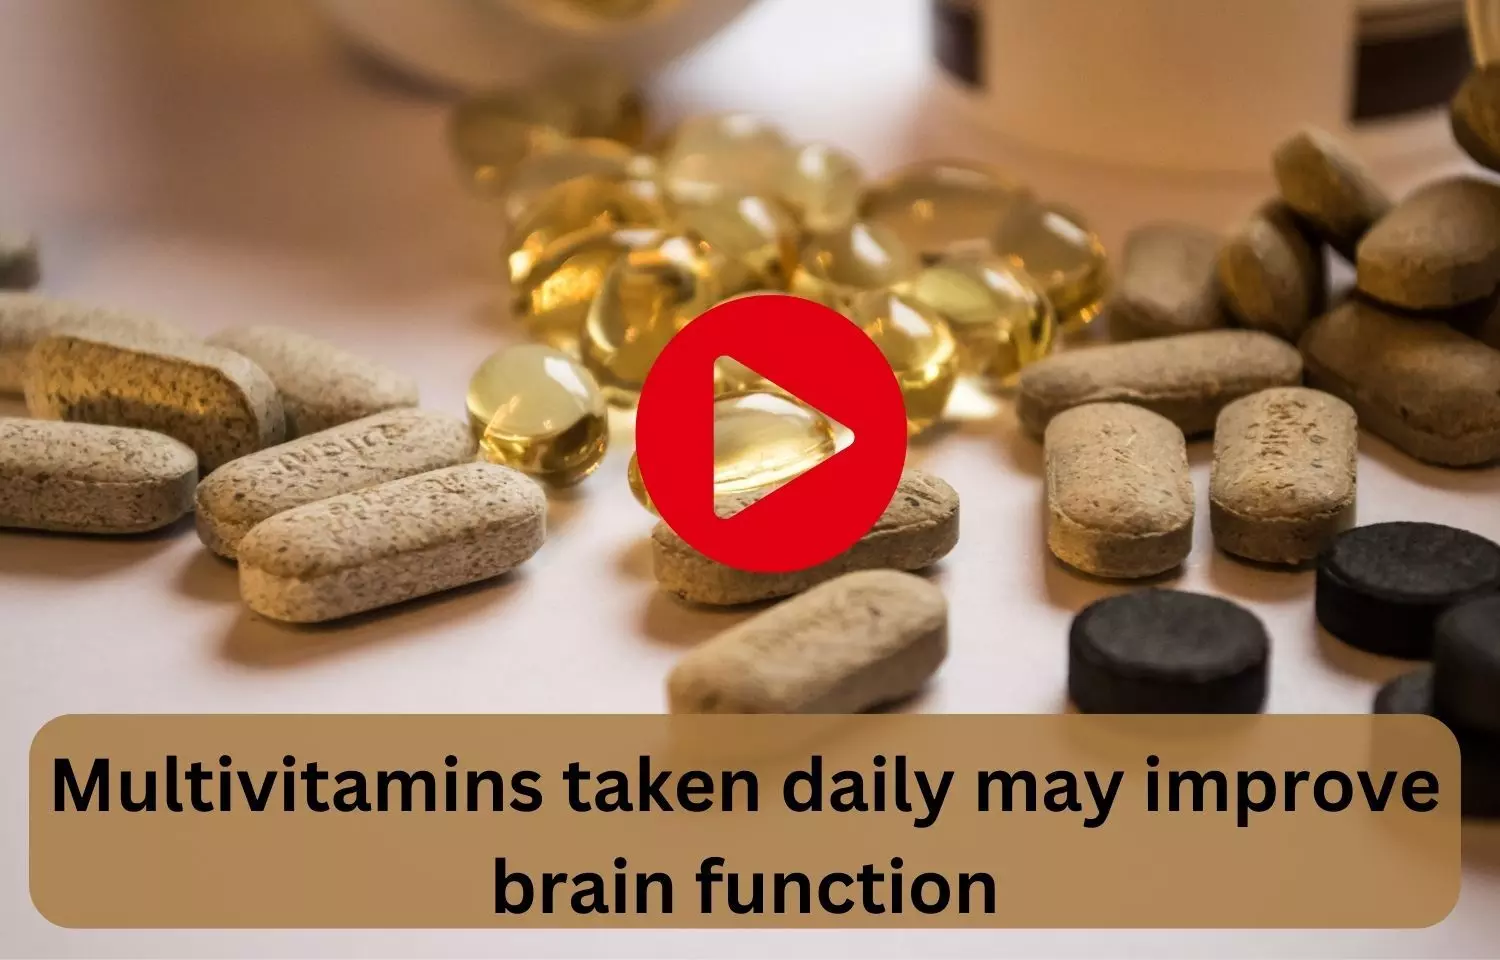 Multivitamins taken daily may improve brain function